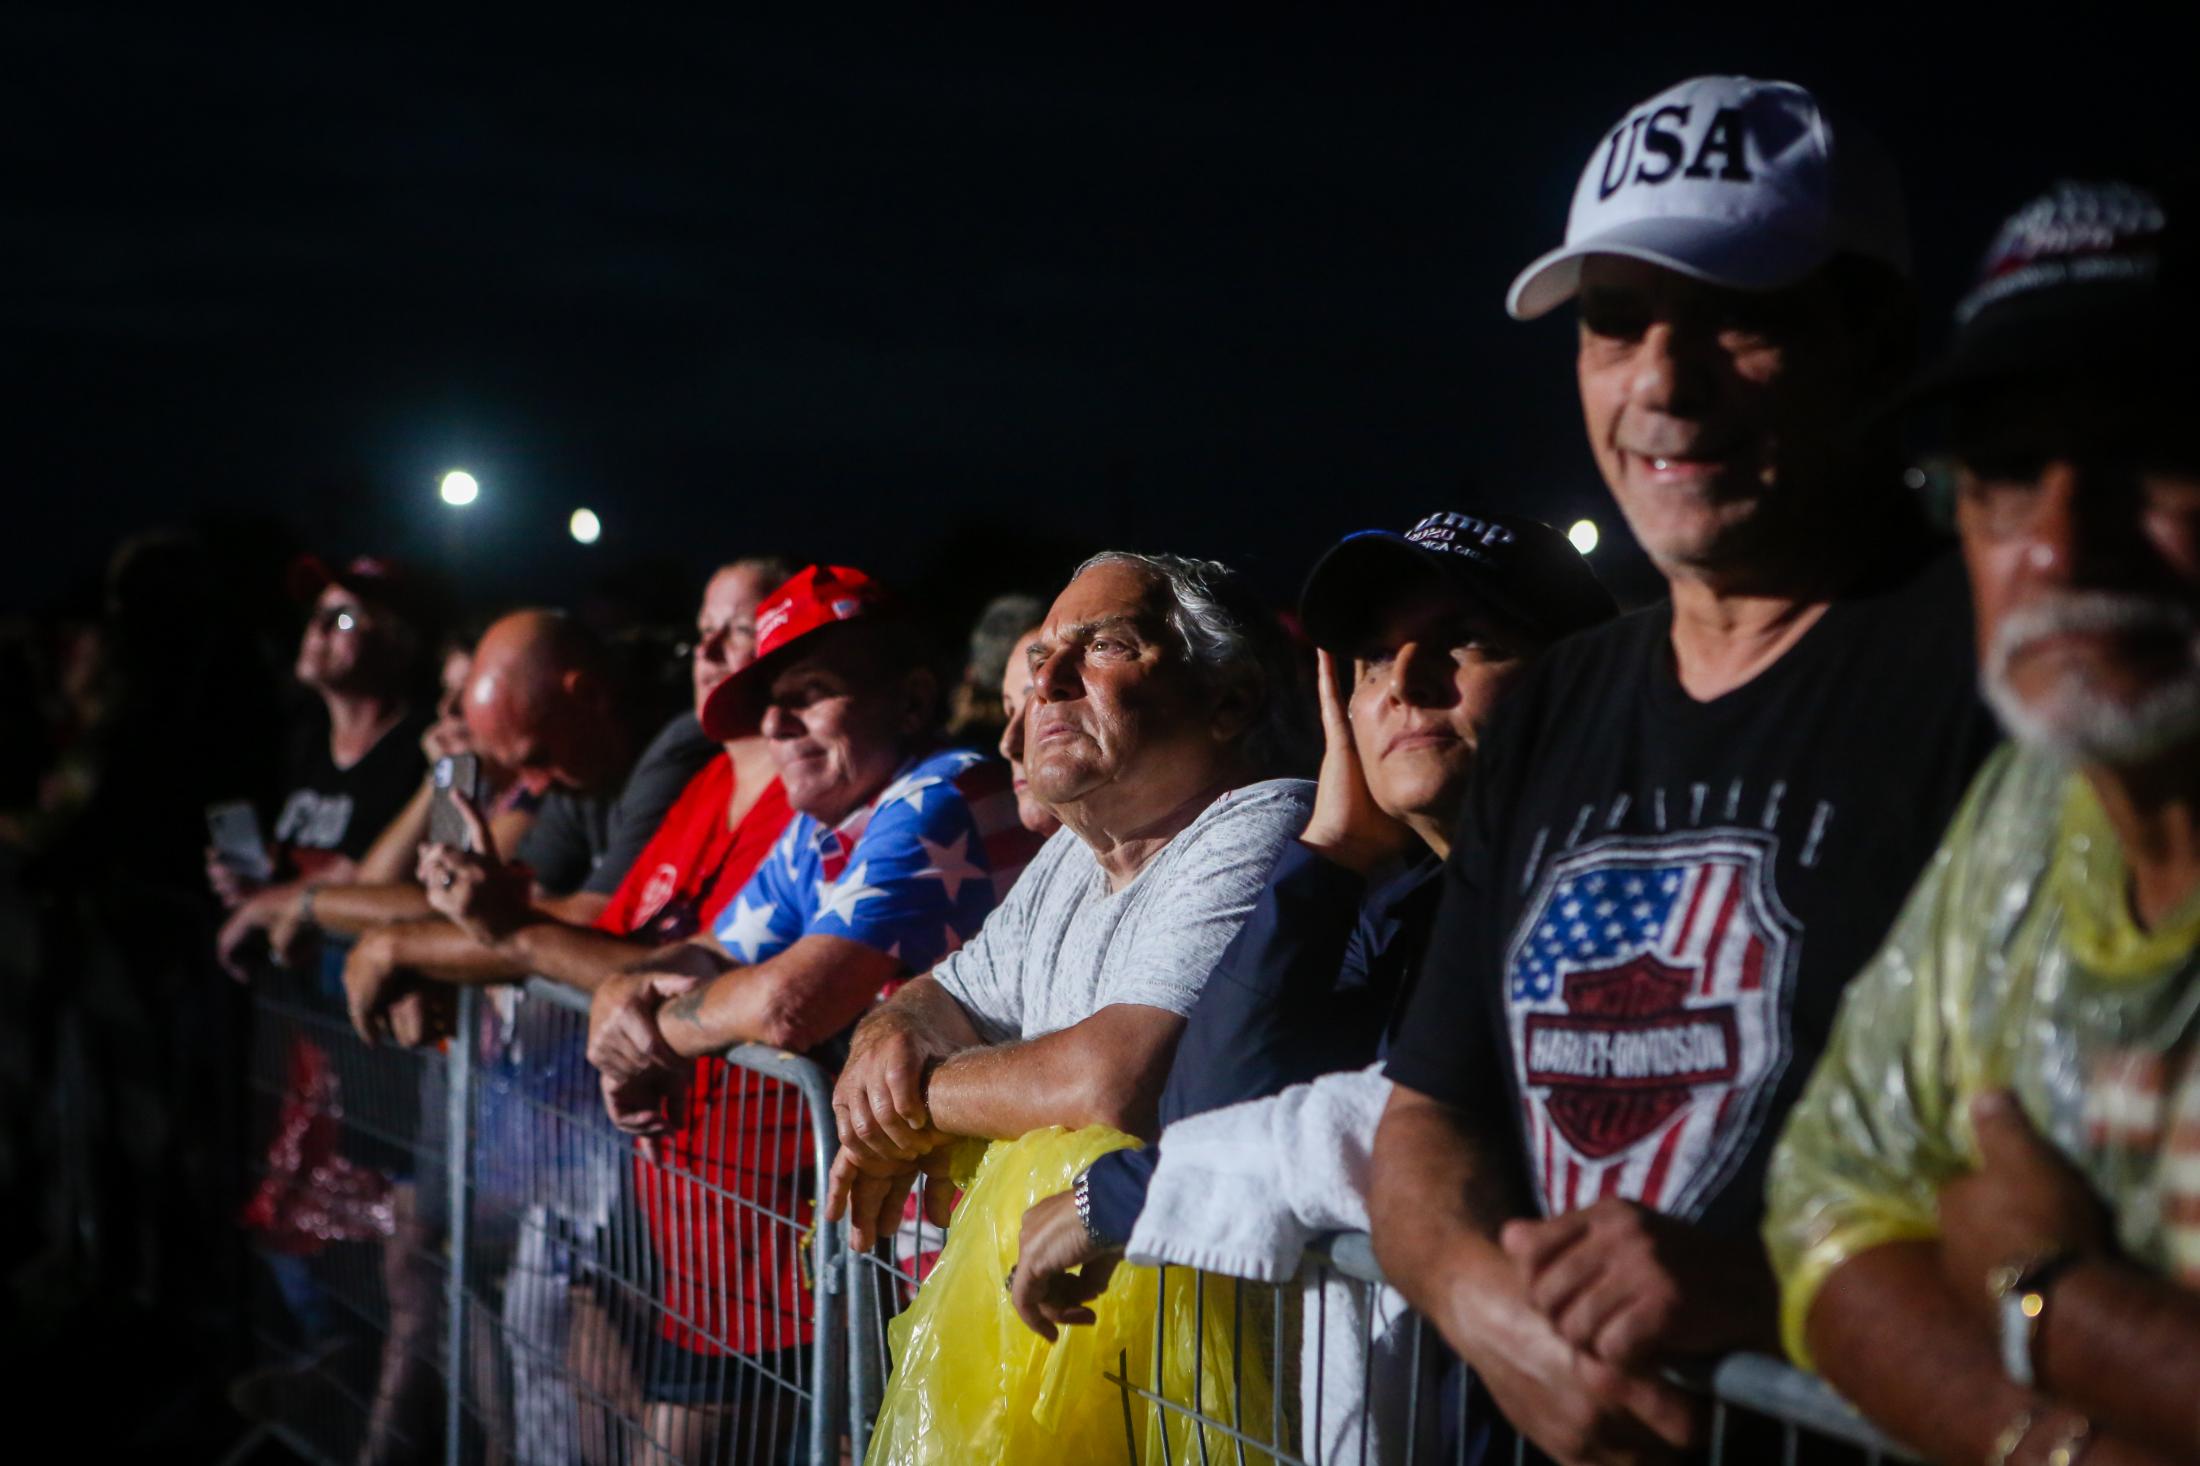 2021 - Former U.S. President Donald Trump @ Sarasota, FL - SARASOTA, FL - JULY 03: People listen as former U.S....